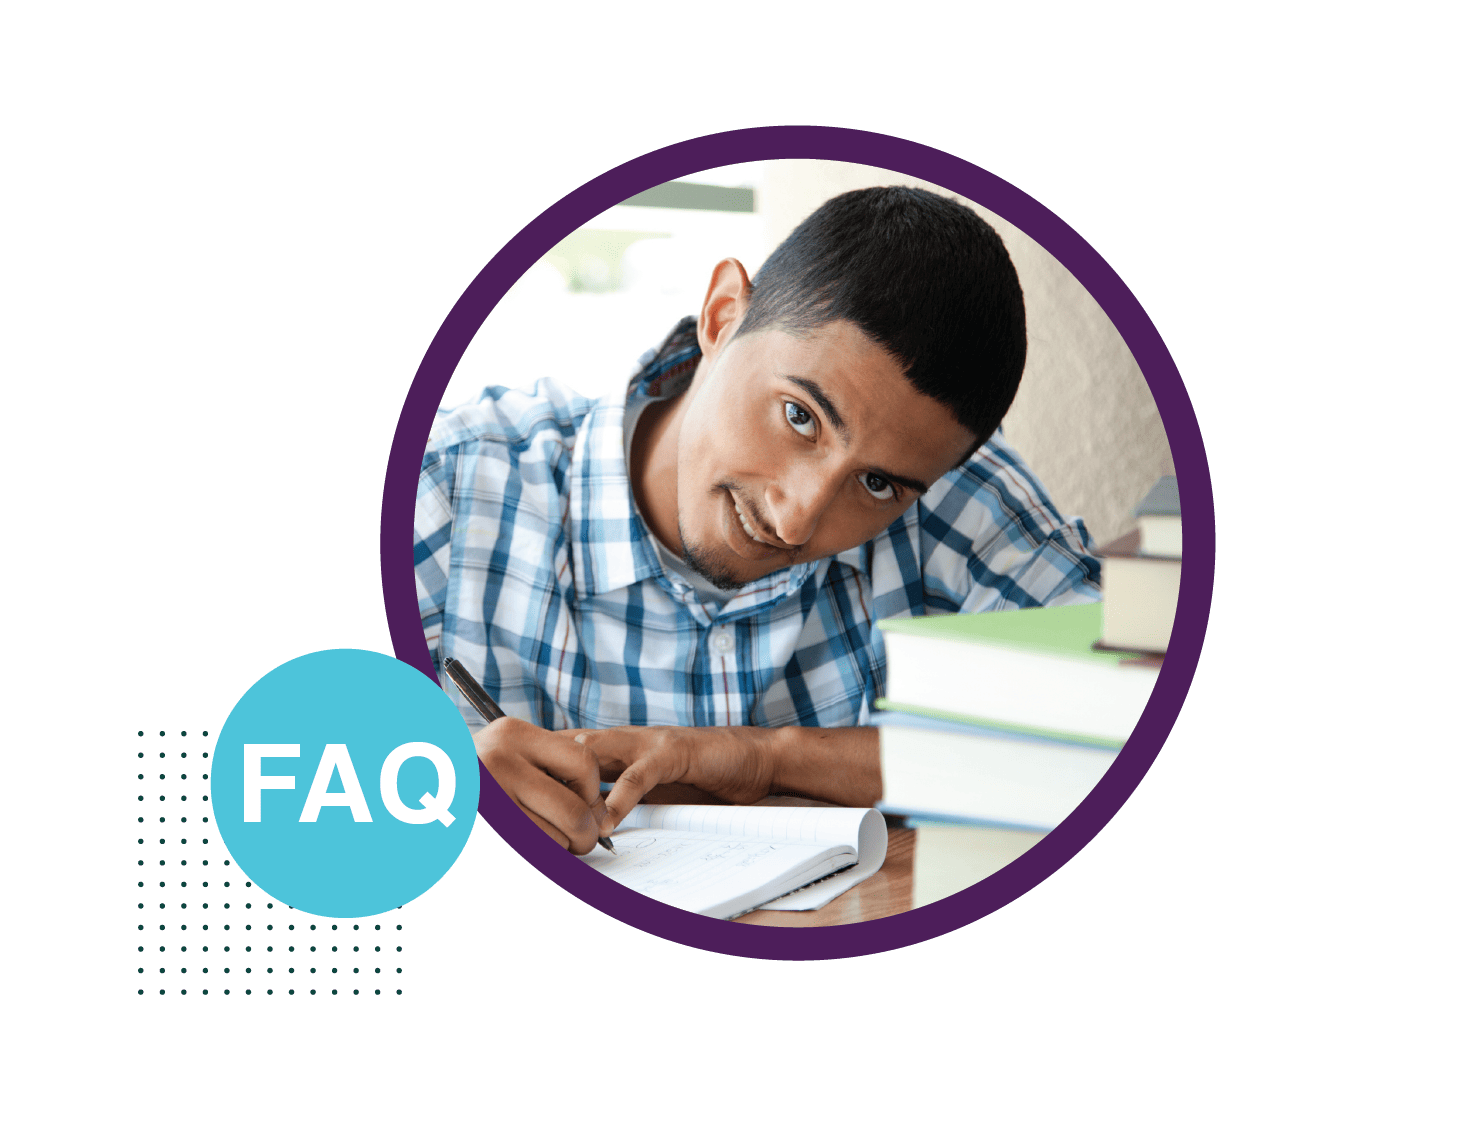 FAQ - High School Student working on Classwork